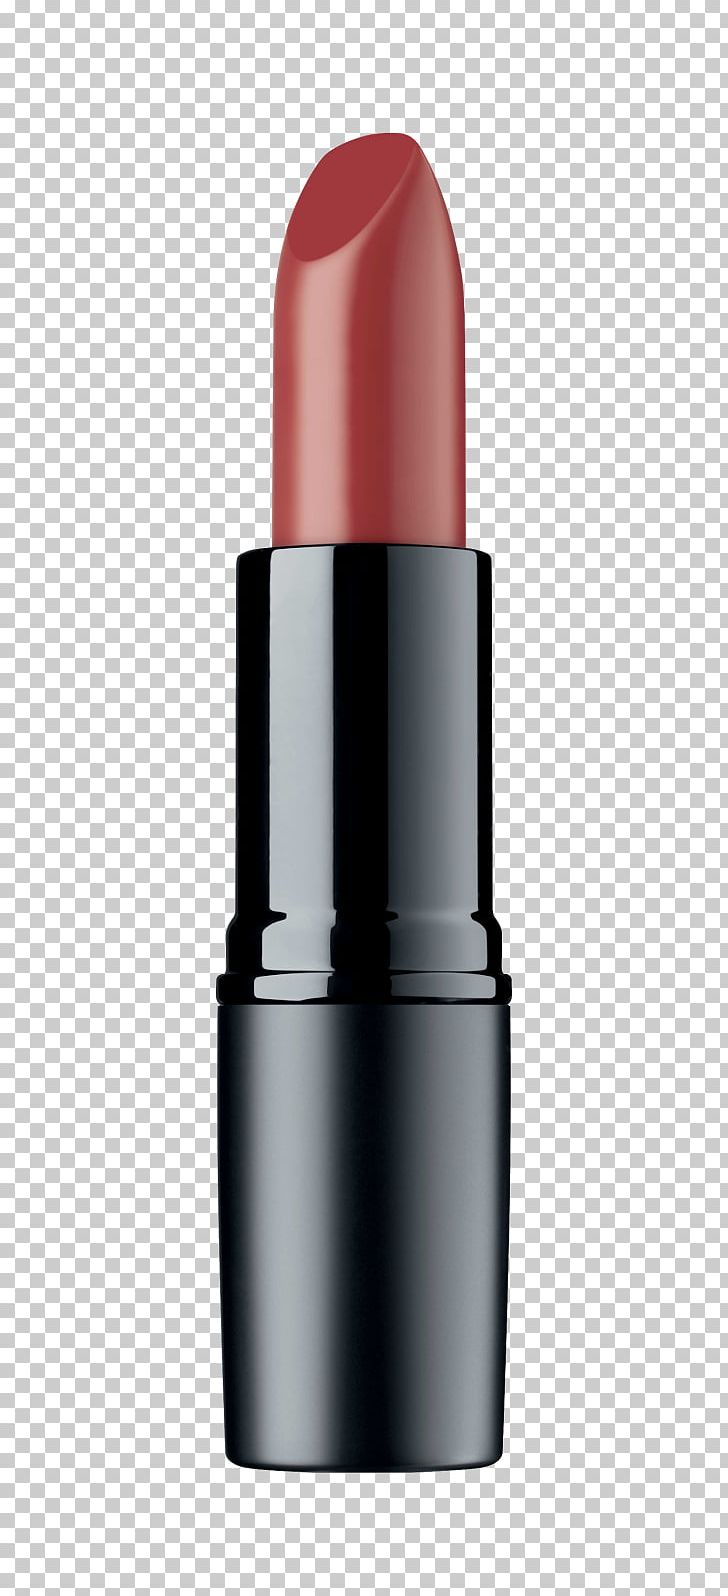 Lipstick Pomade Cosmetics Make-up PNG, Clipart, Artdeco, Beslistnl, Cosmetics, Douglas, Face Free PNG Download